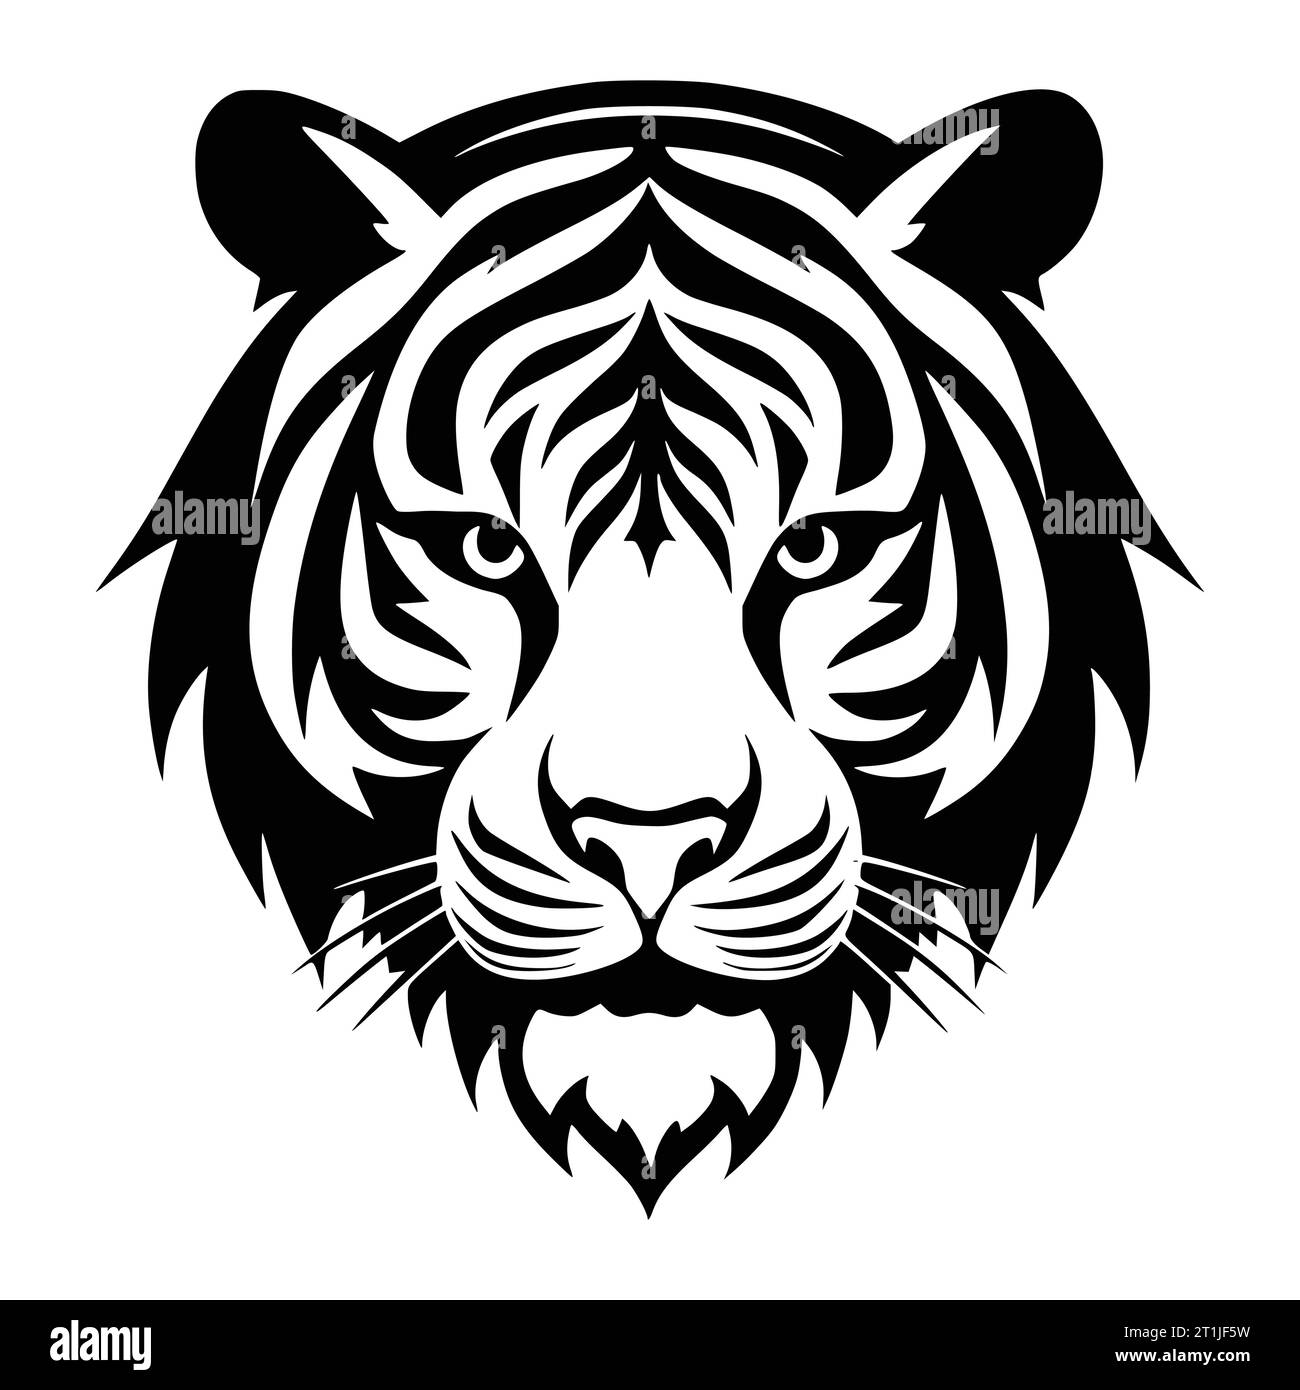 tiger wild animal head illustration for logo, mascot or symbol Stock Vector